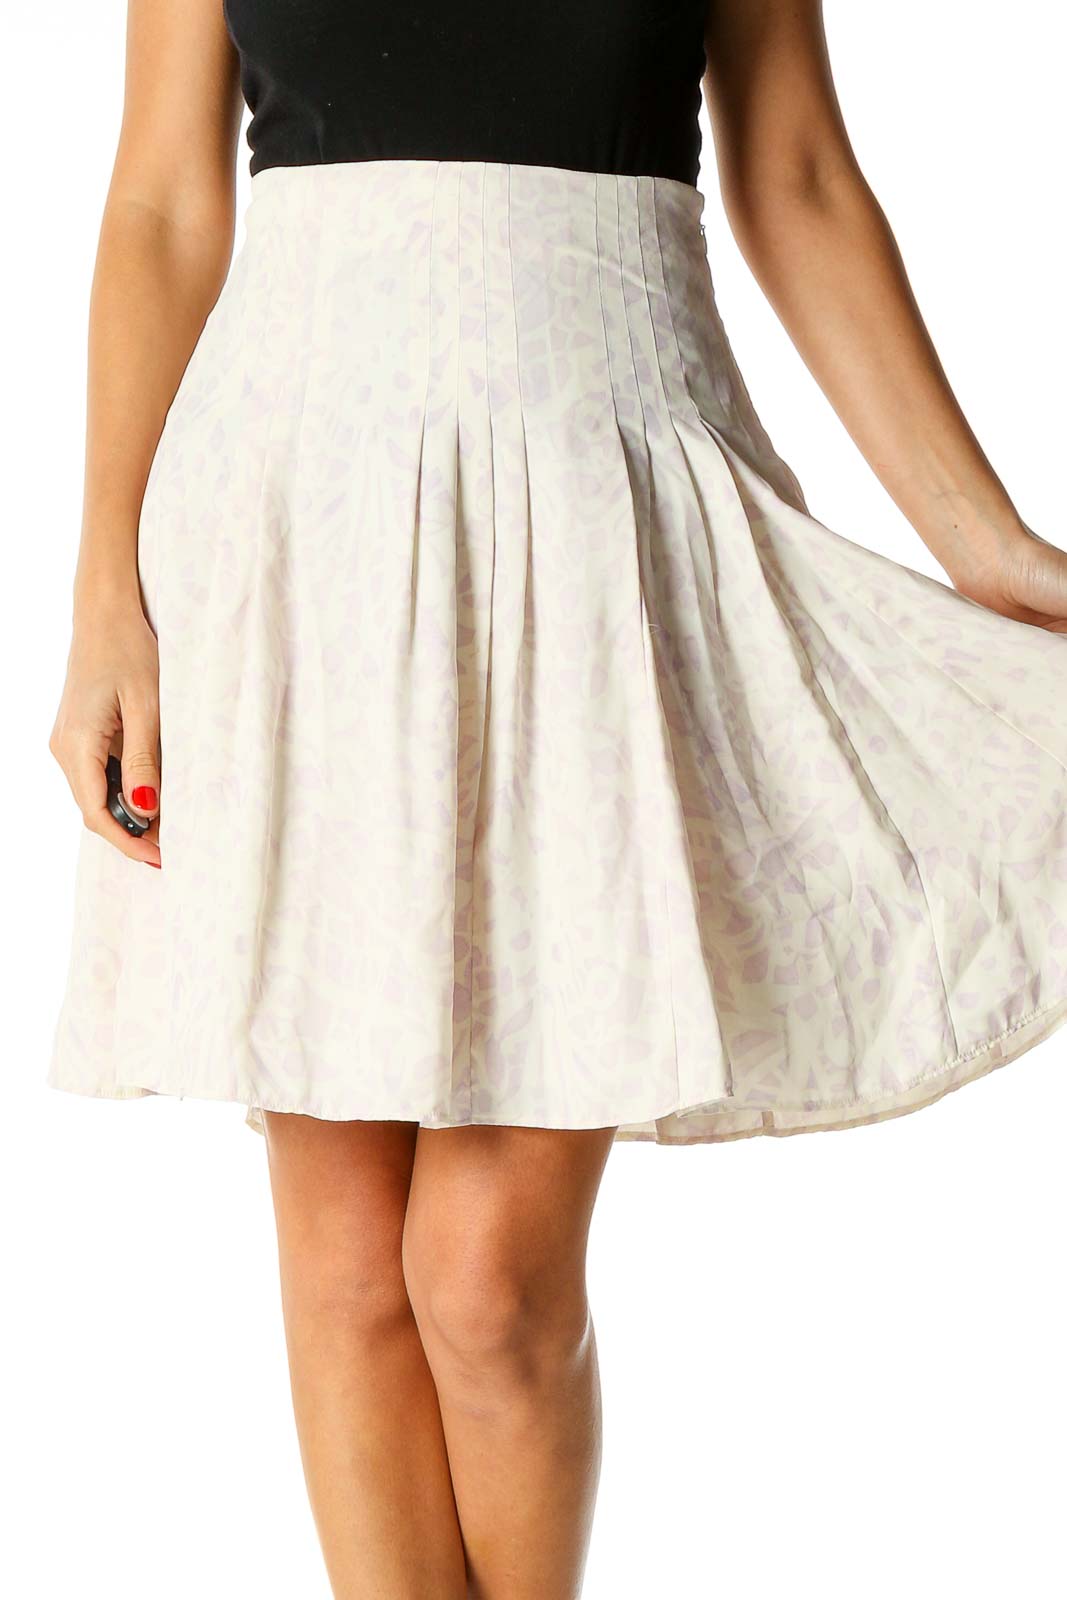 White Chic Flared Skirt Front